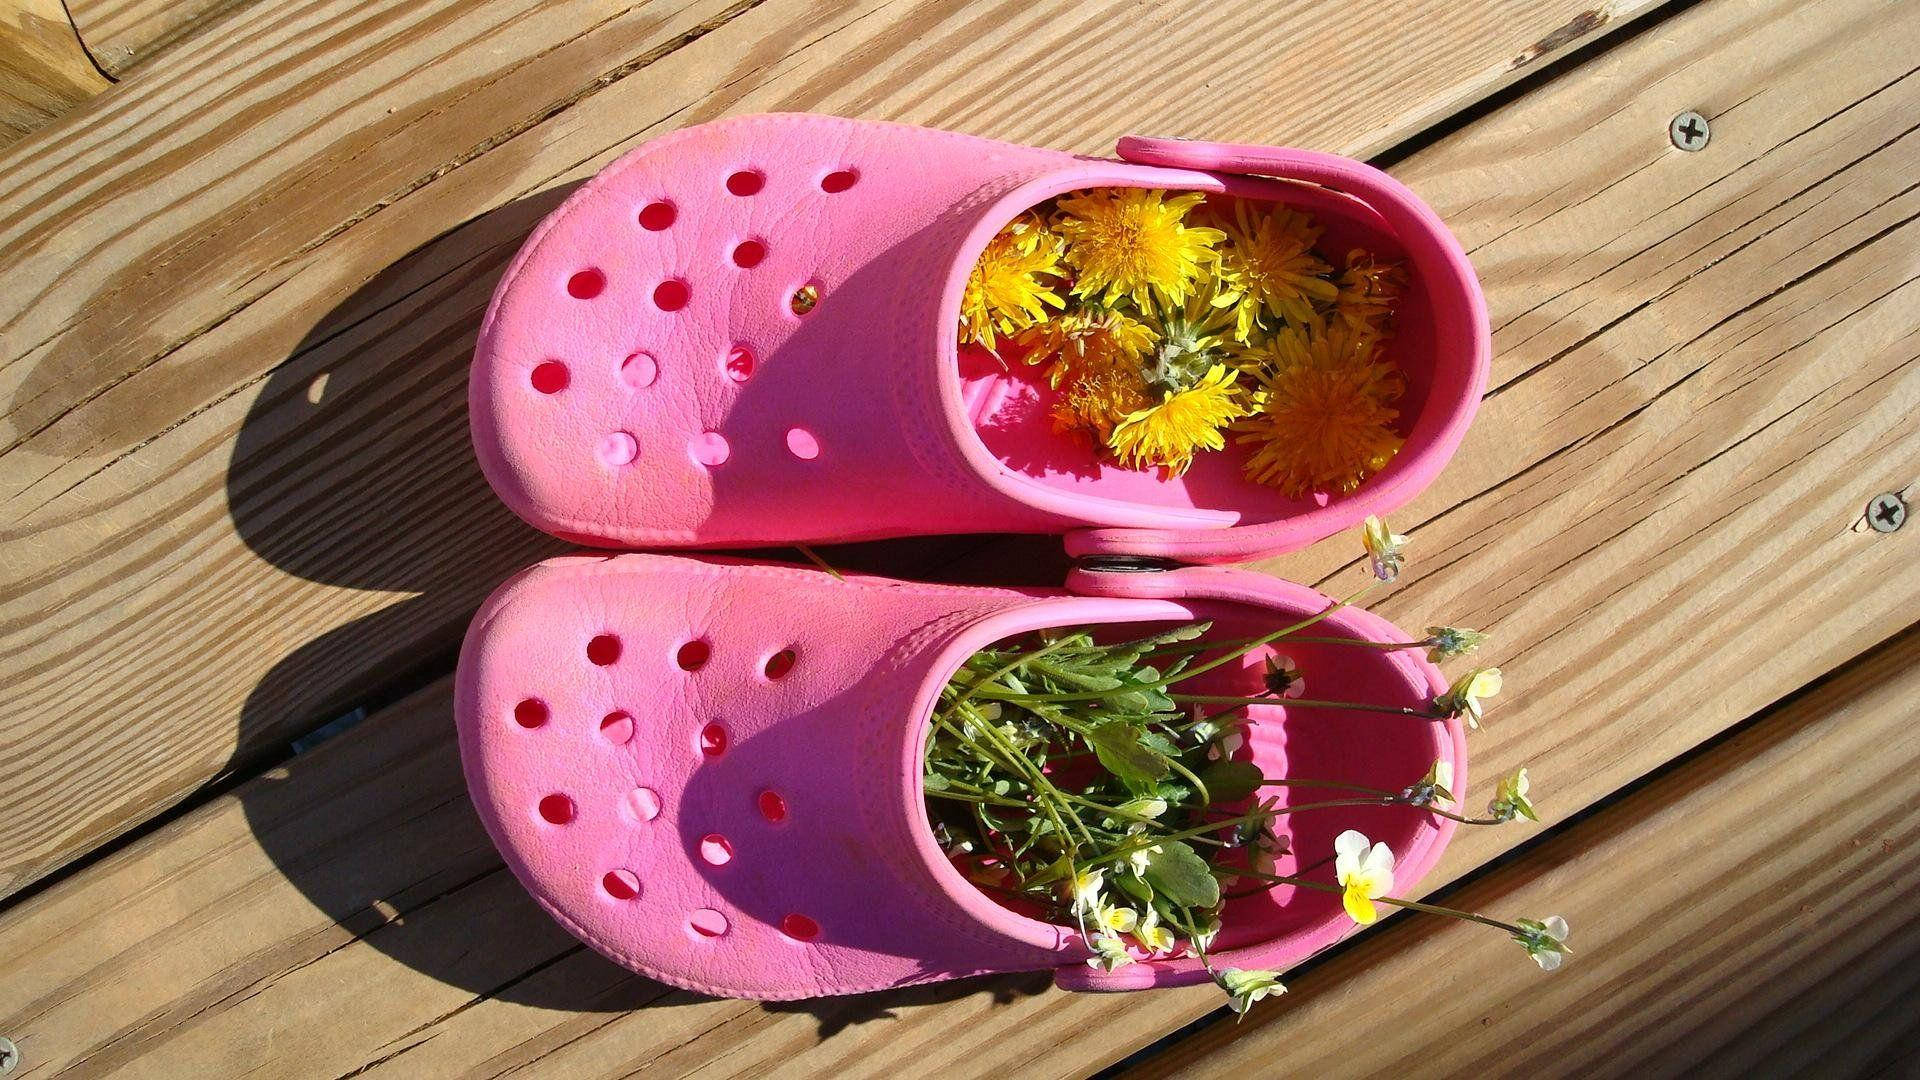 Crocs Footwear With Flowers Wallpaper